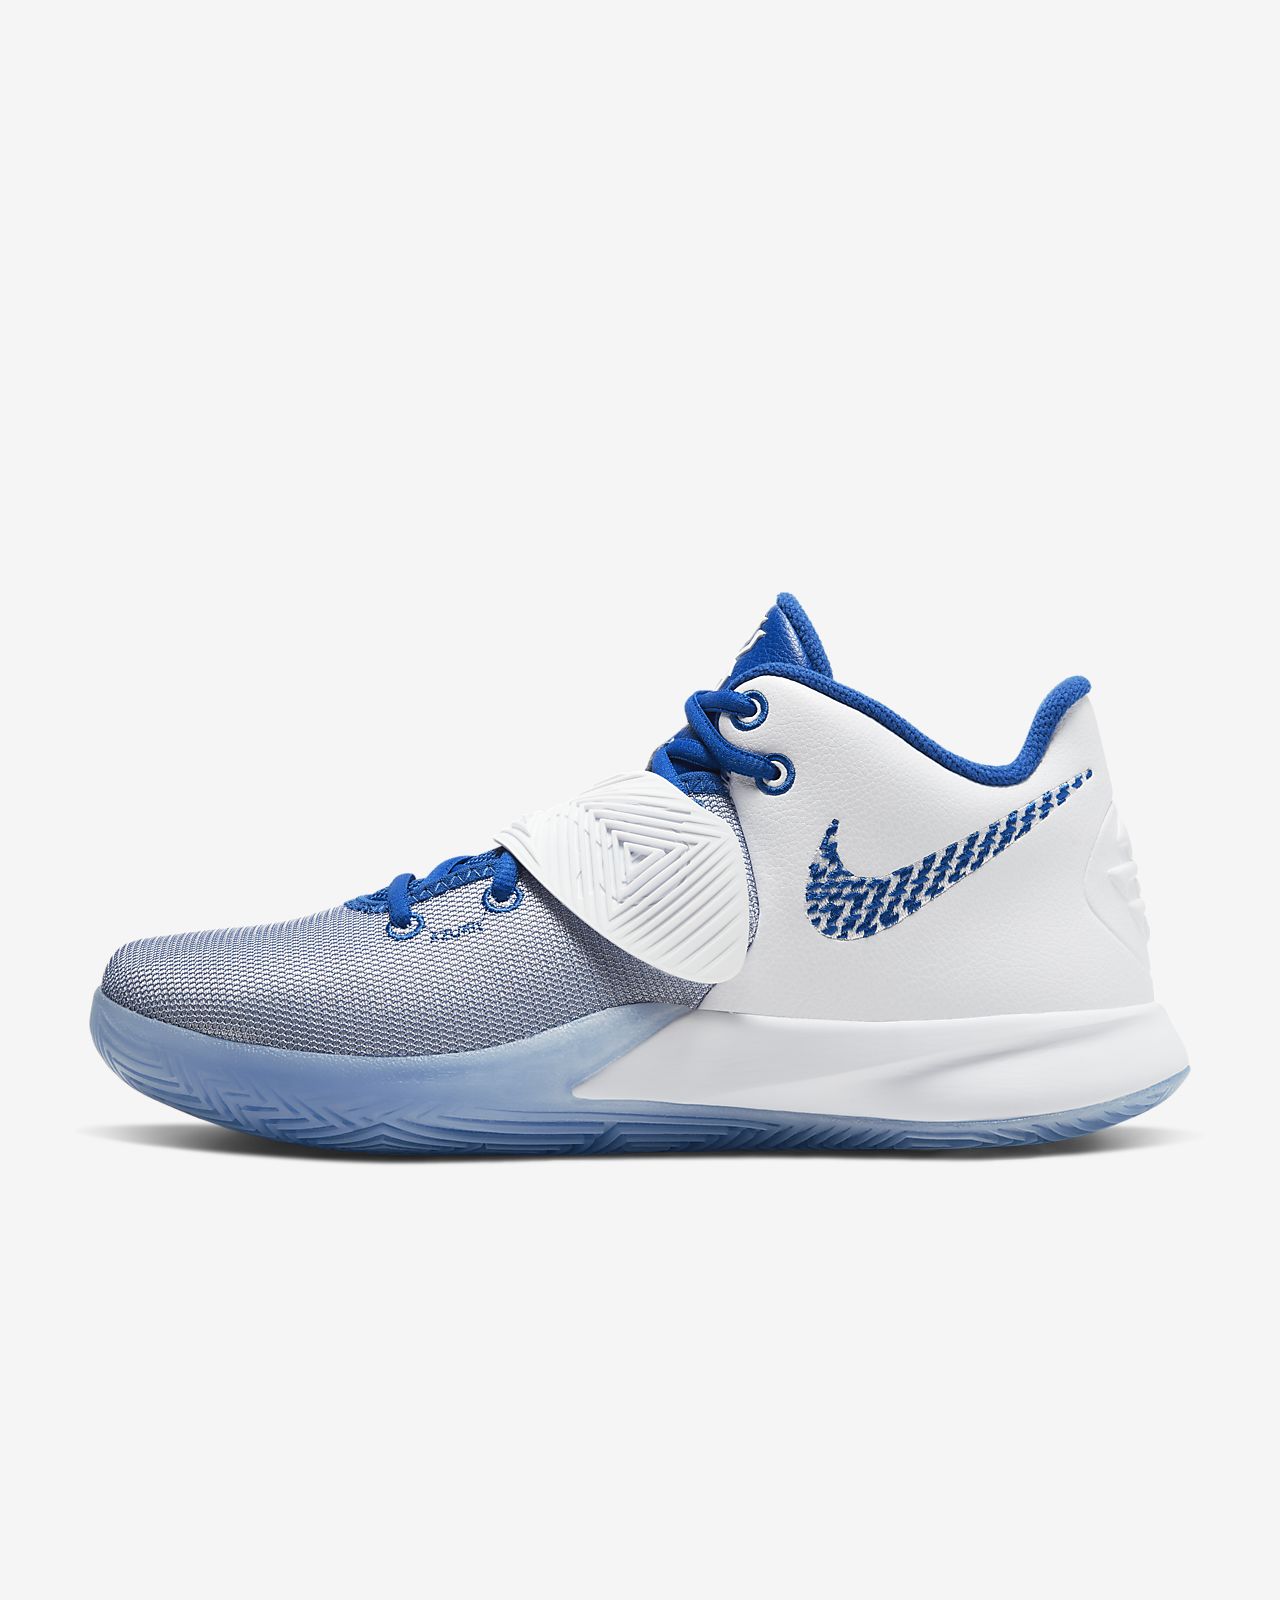 Kyrie Flytrap 3 Basketball Shoe. Nike.com